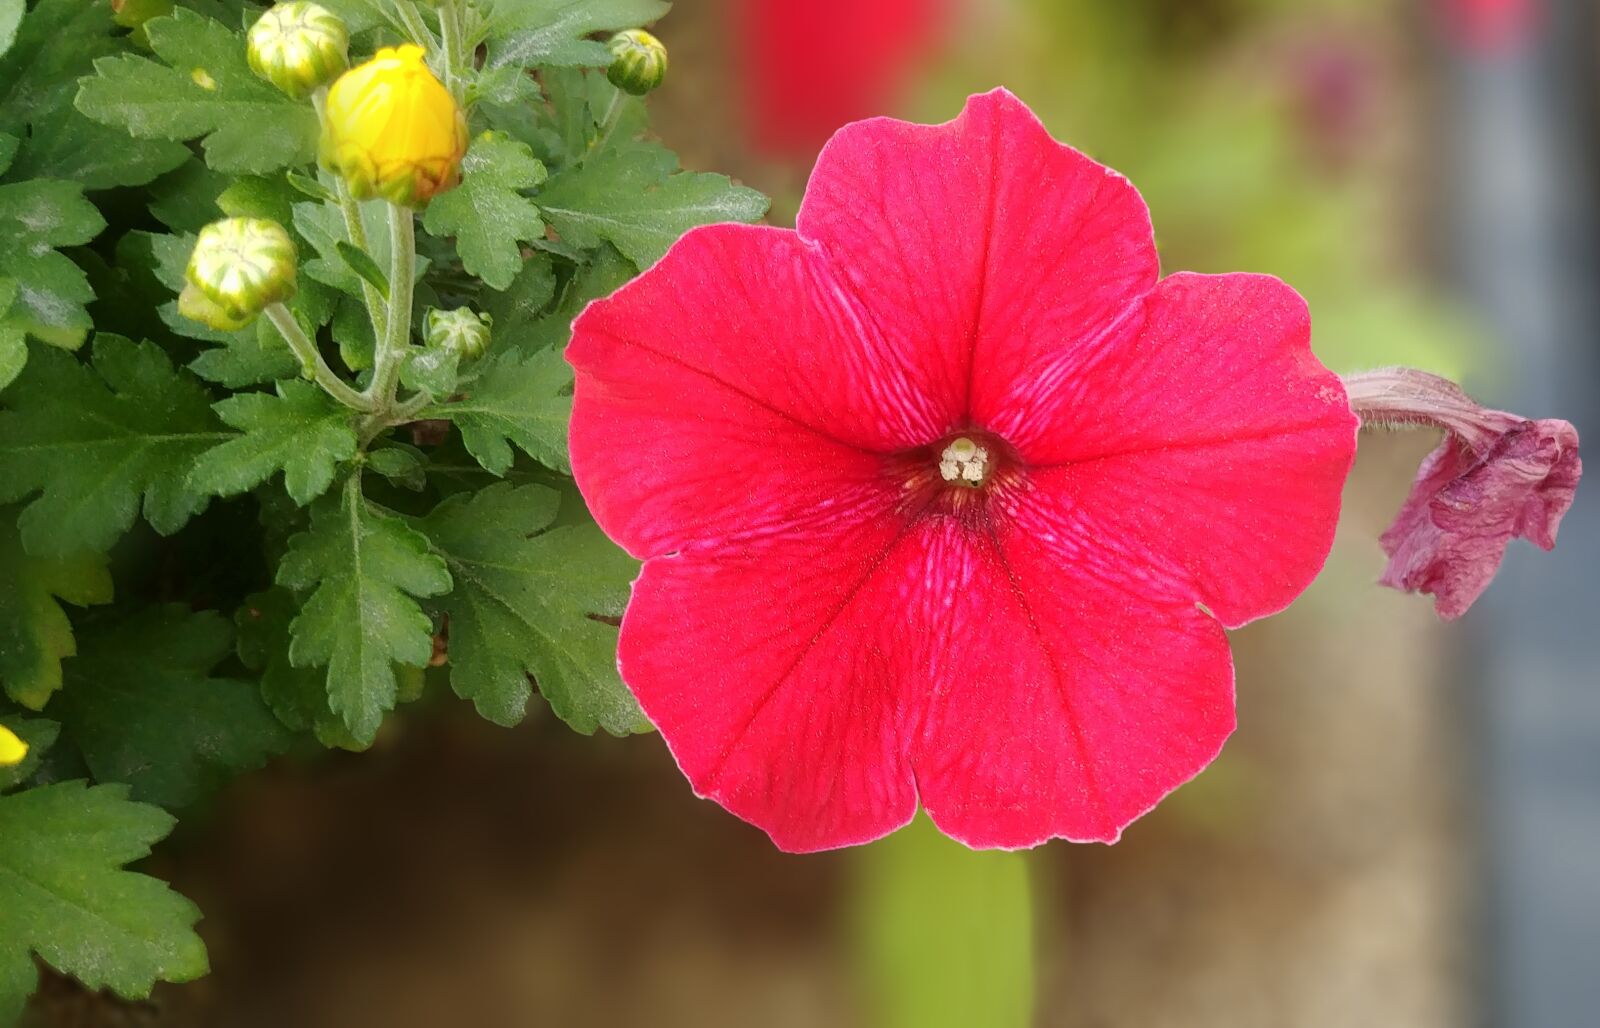 LG G6 sample photo. Petunia, red flower, beautiful photography